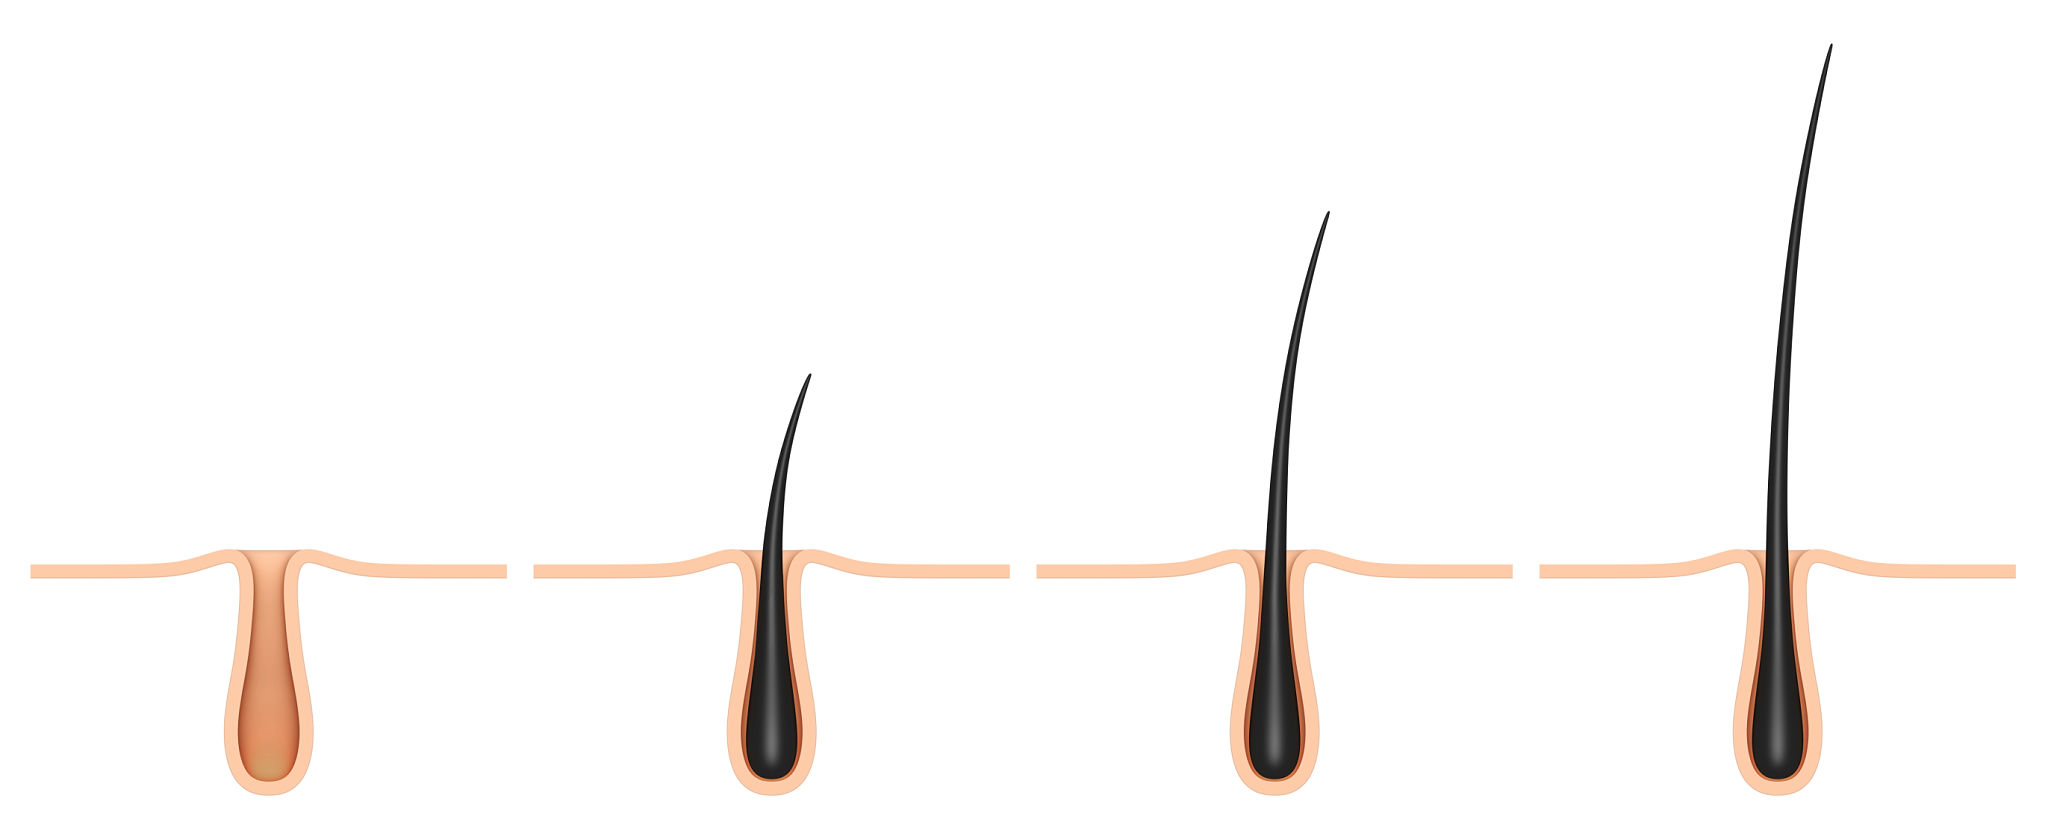 چرخه رشد مو از درون فولیکول مو 